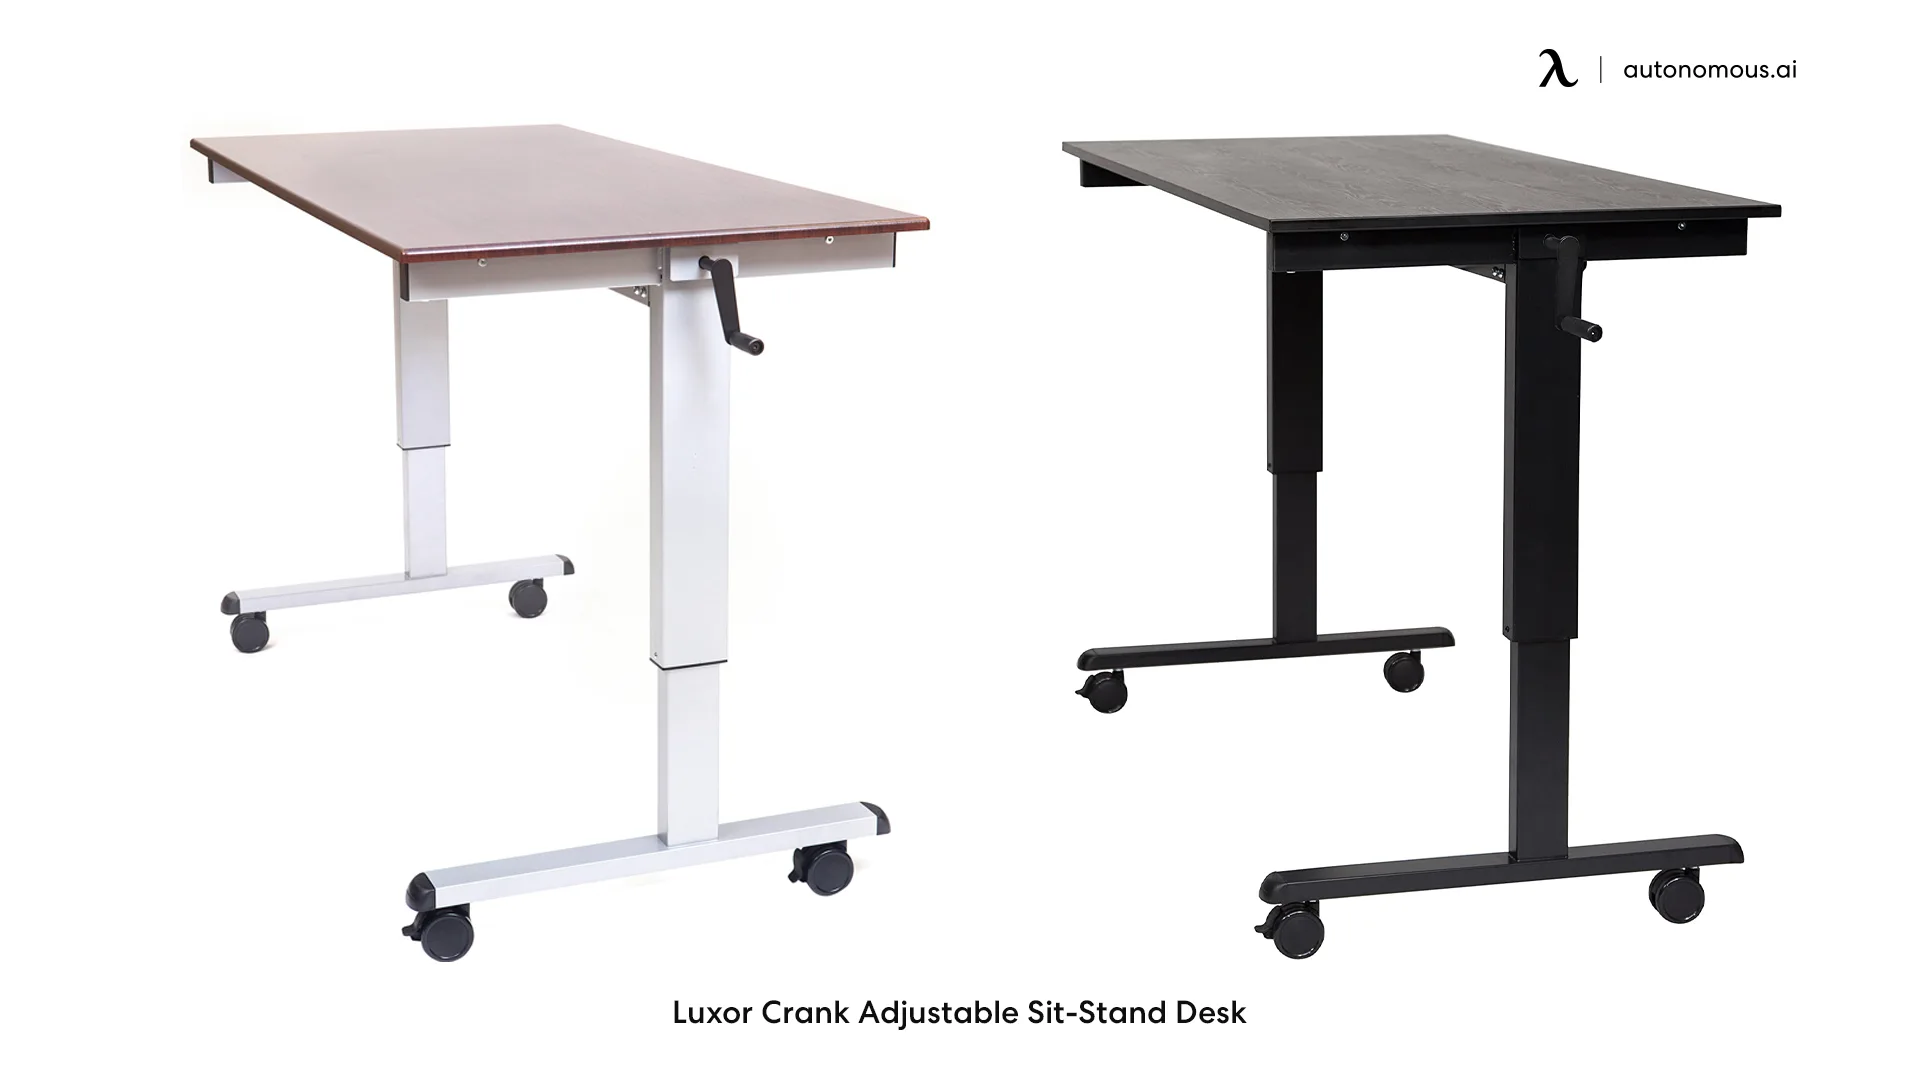 Luxor Crank Adjustable Sit-Stand Desk